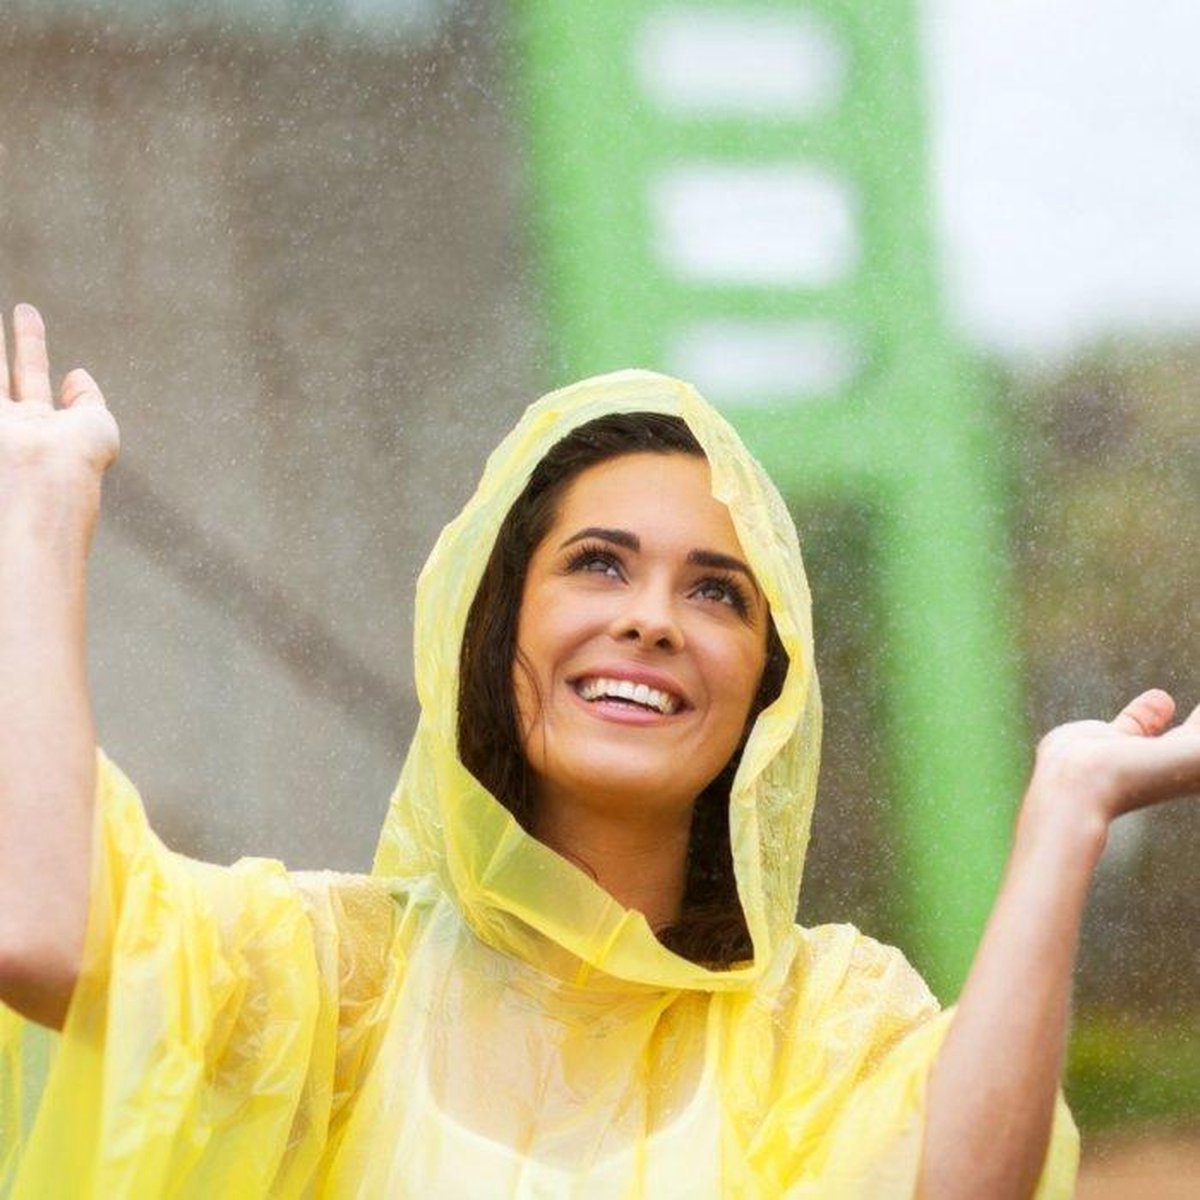 10 stuks beschermende wegwerp poncho transparant | Regen | Festival | wandelen | evenement - Merkloos